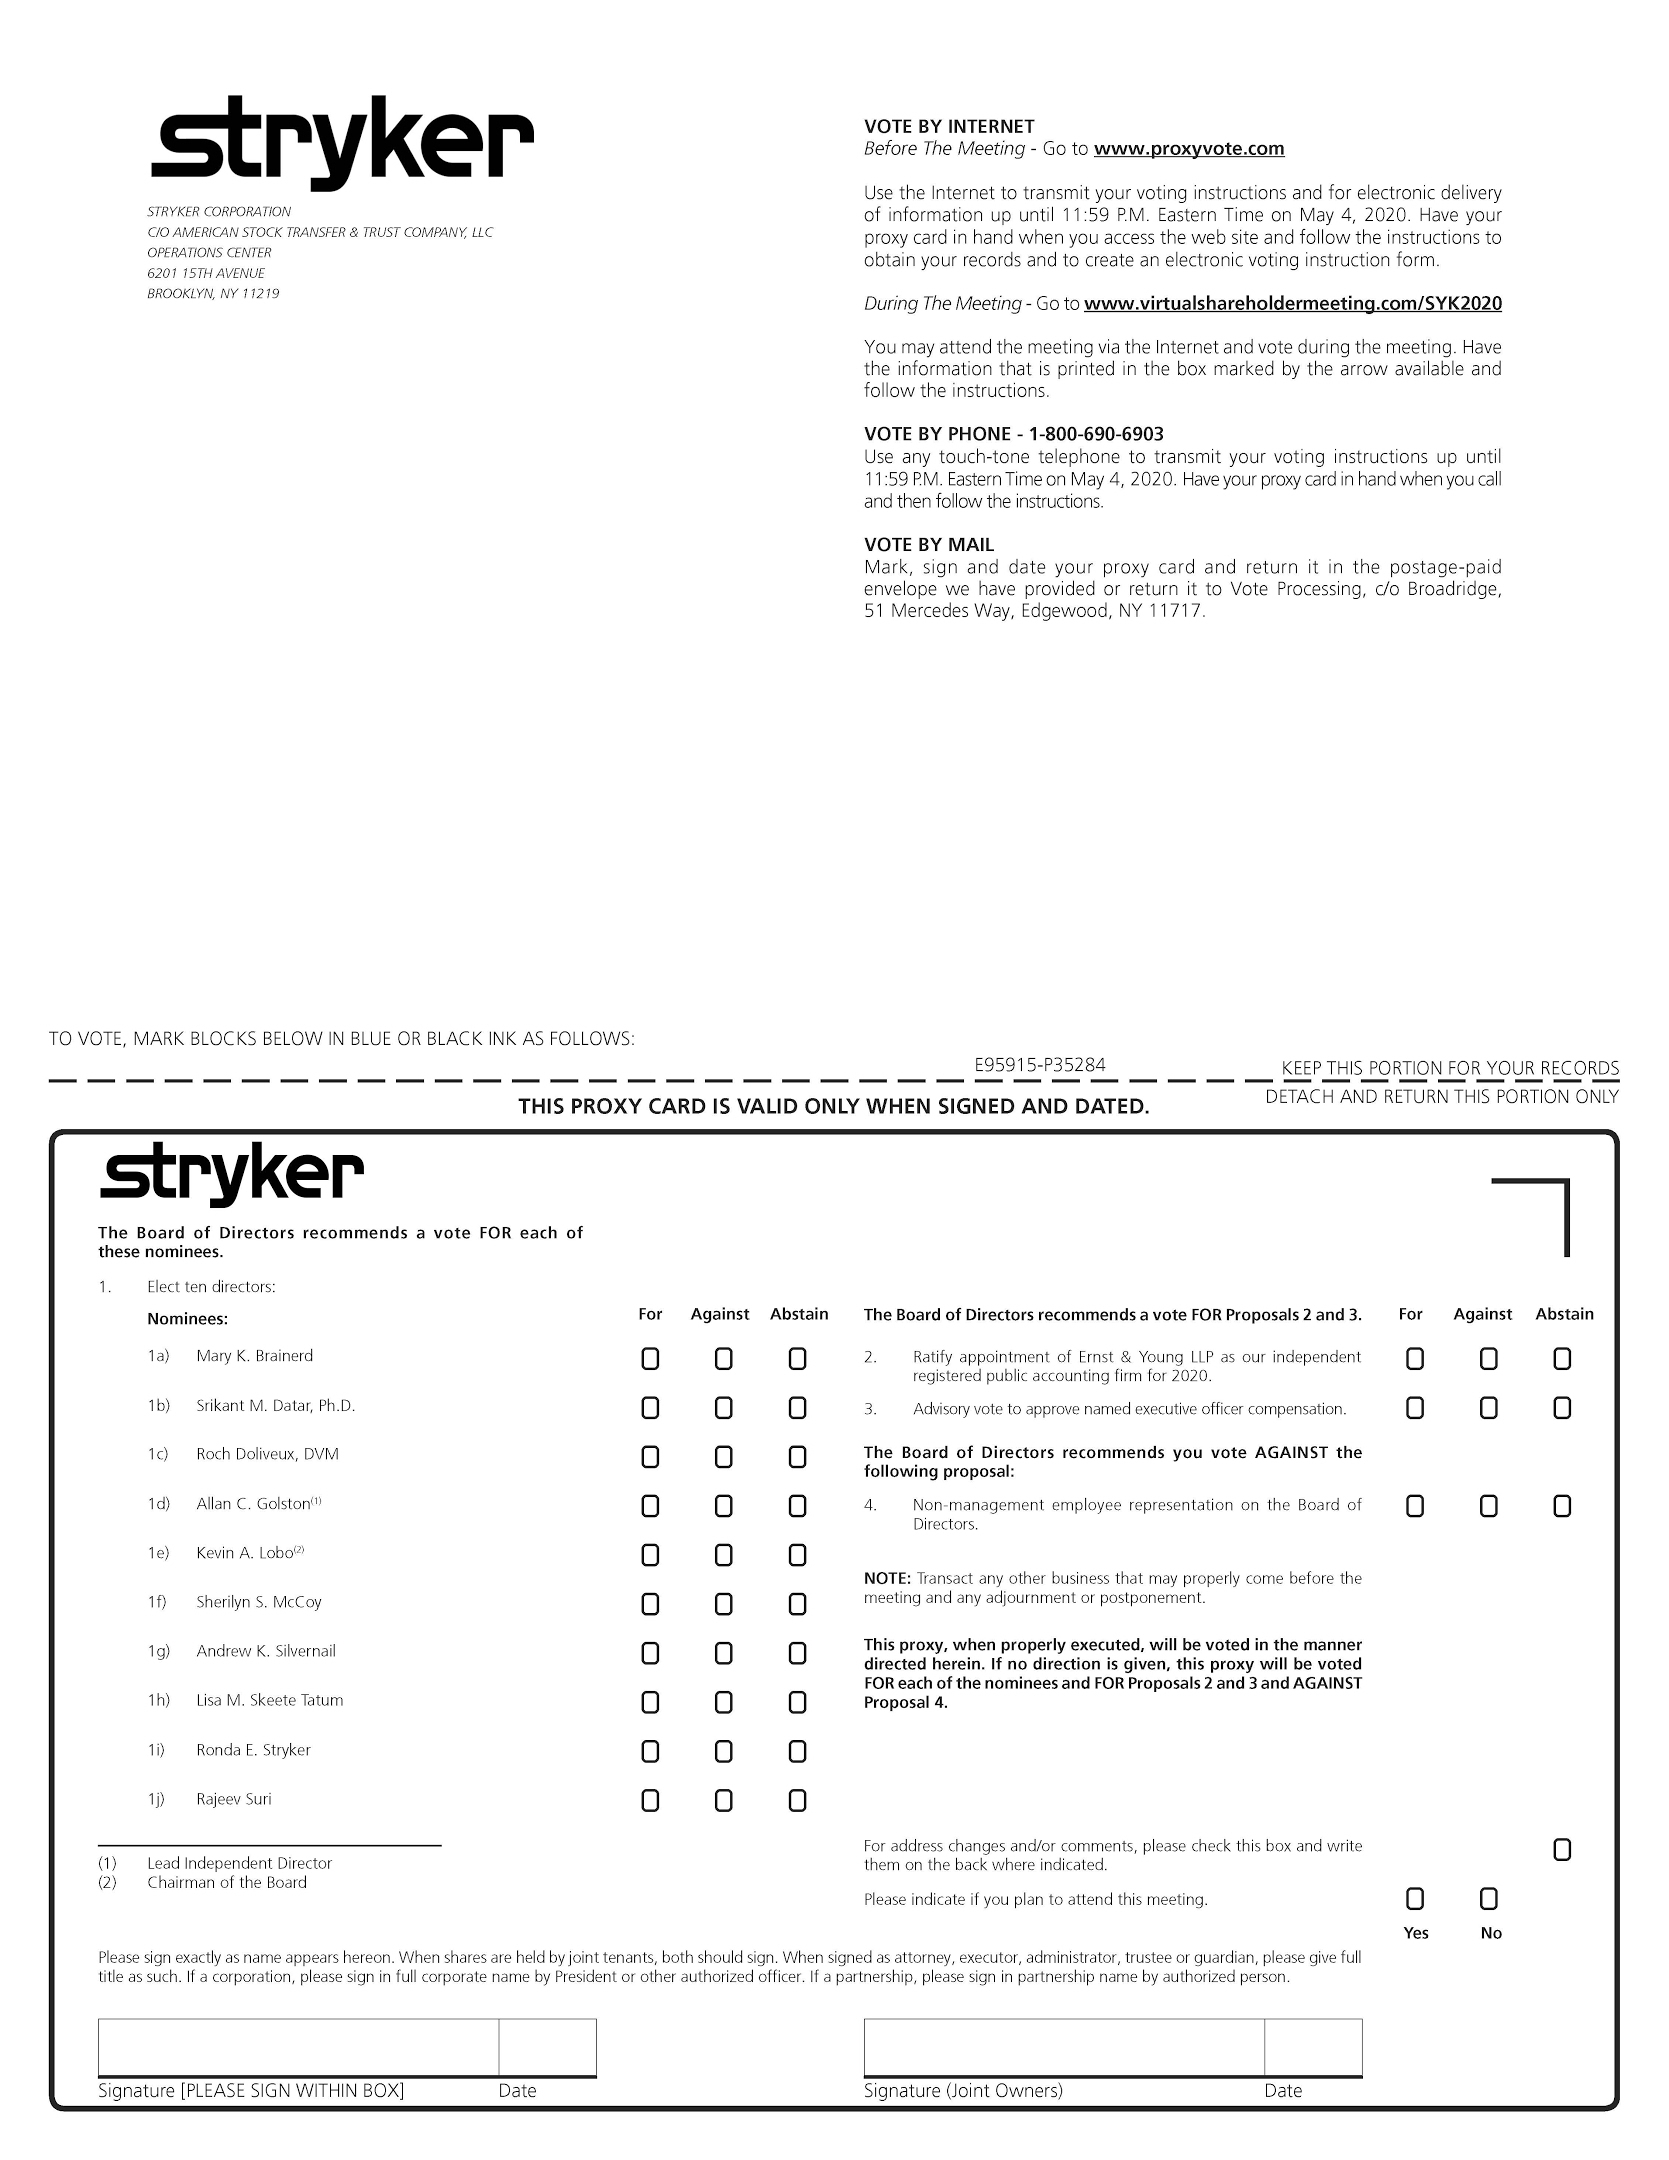 sykproxycard1a04.jpg